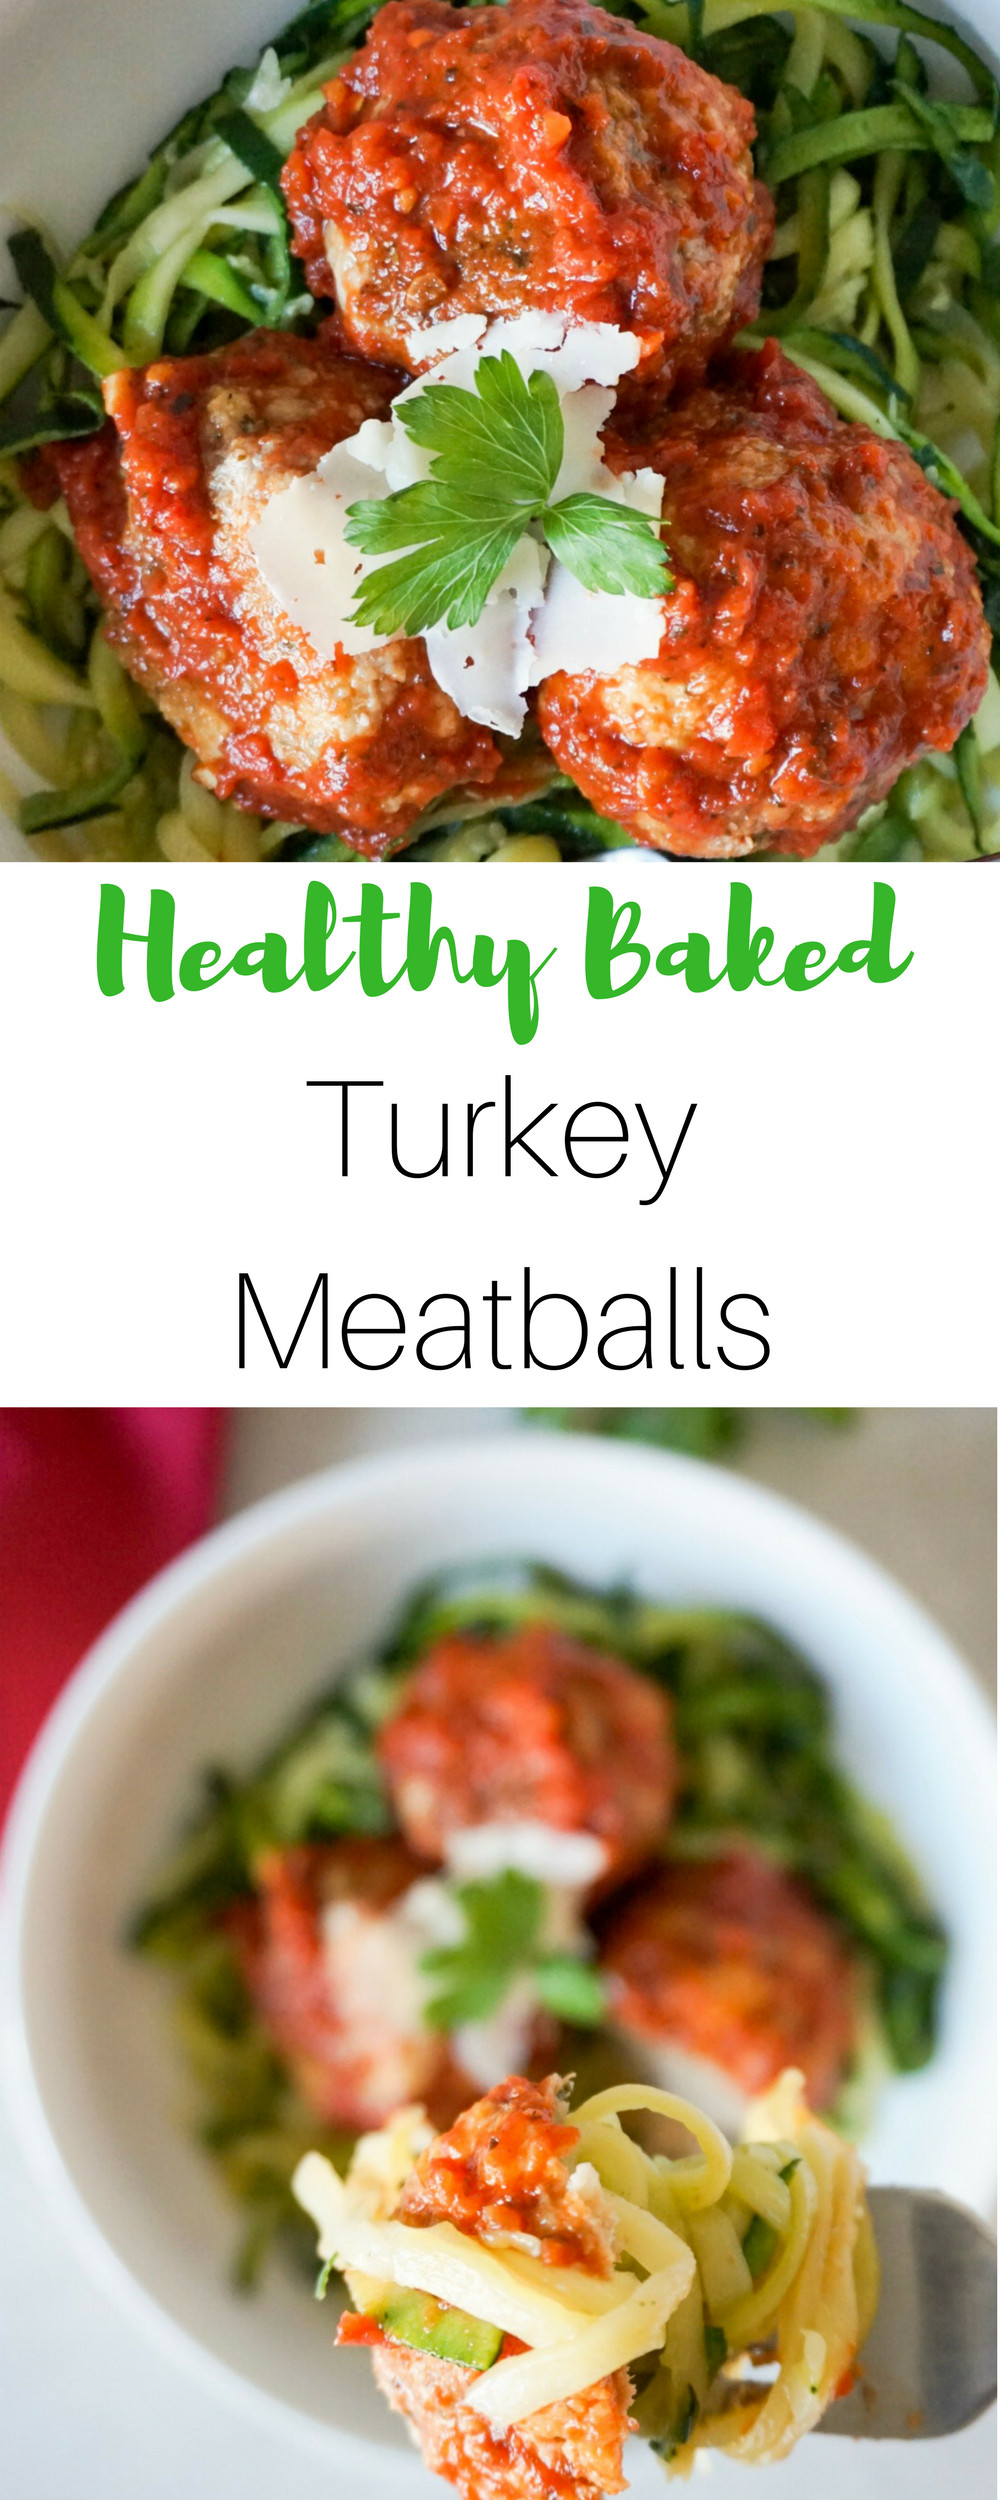 Healthy Ground Turkey Pasta Recipes
 Healthy Baked Turkey Meatballs Gluten Free Low Carb